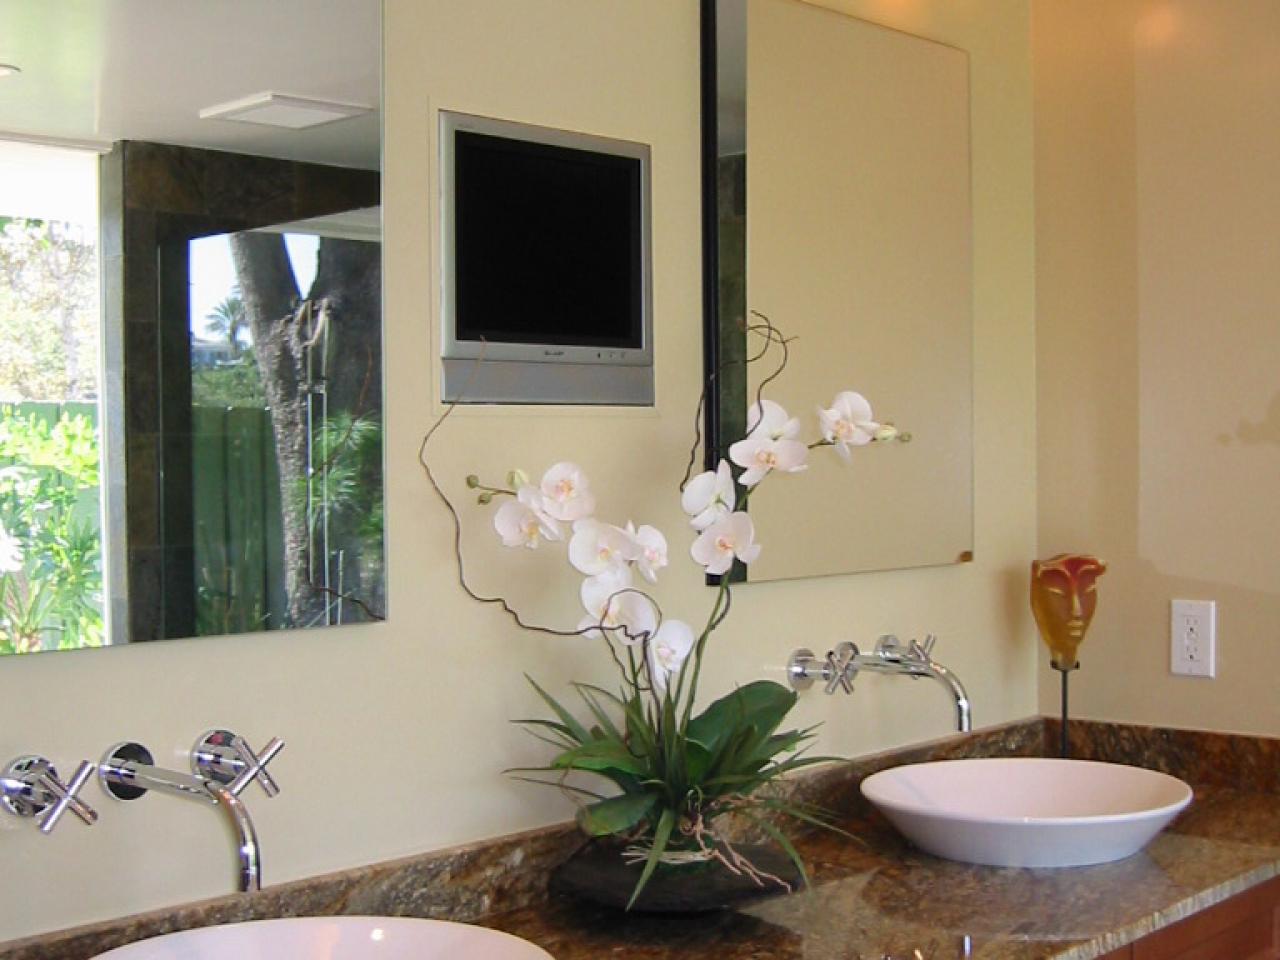 Bathroom Vanity With Built-In TV